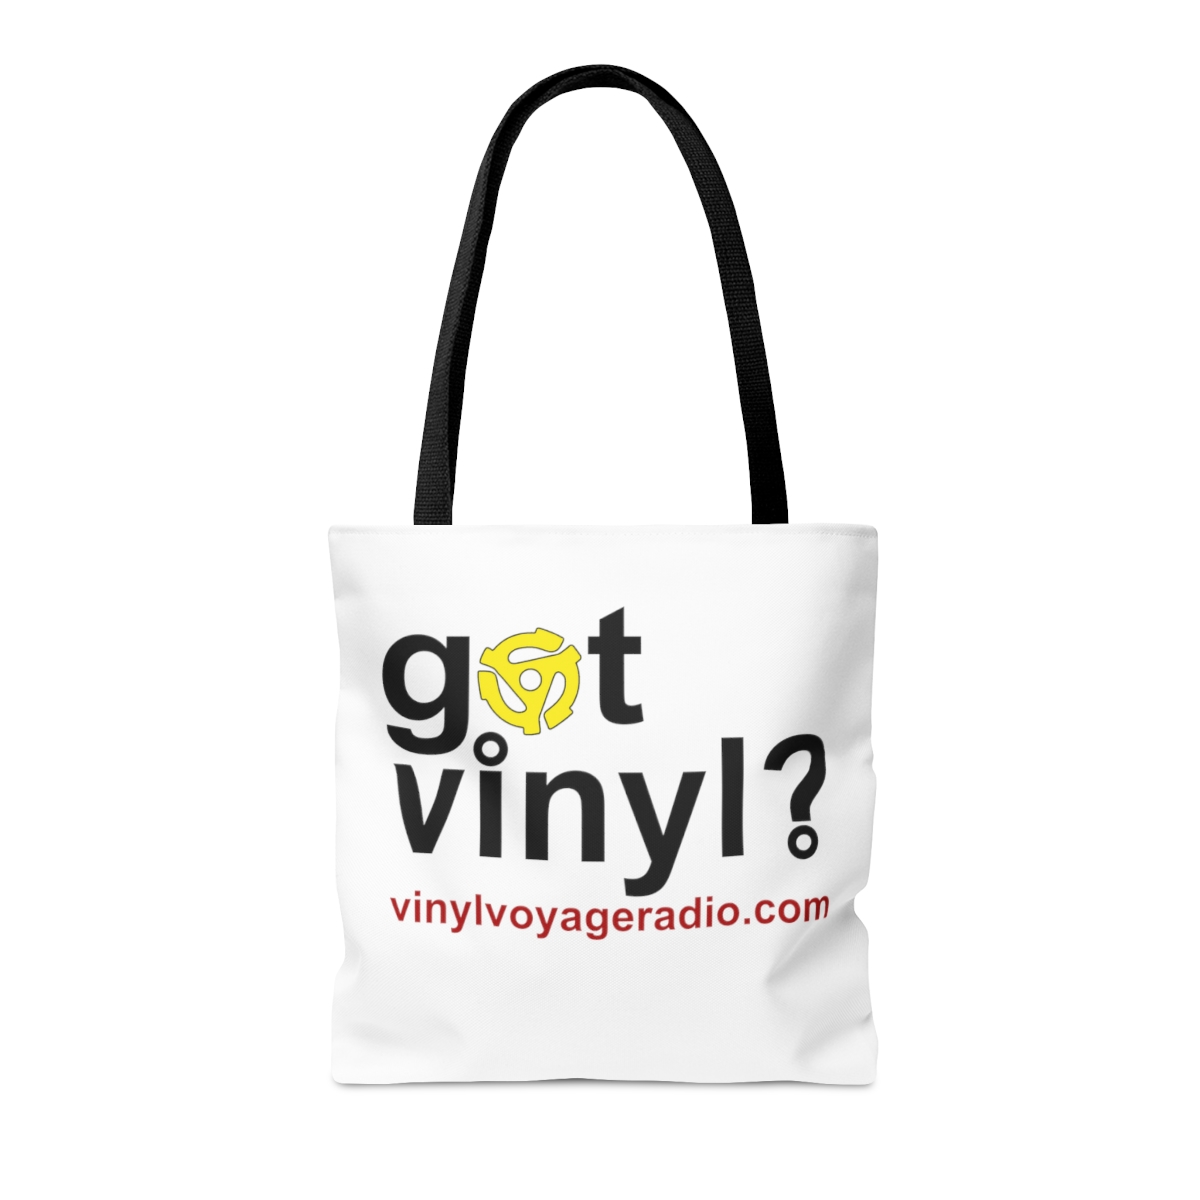 Vinyl Voyage Radio Tote Bag product thumbnail image